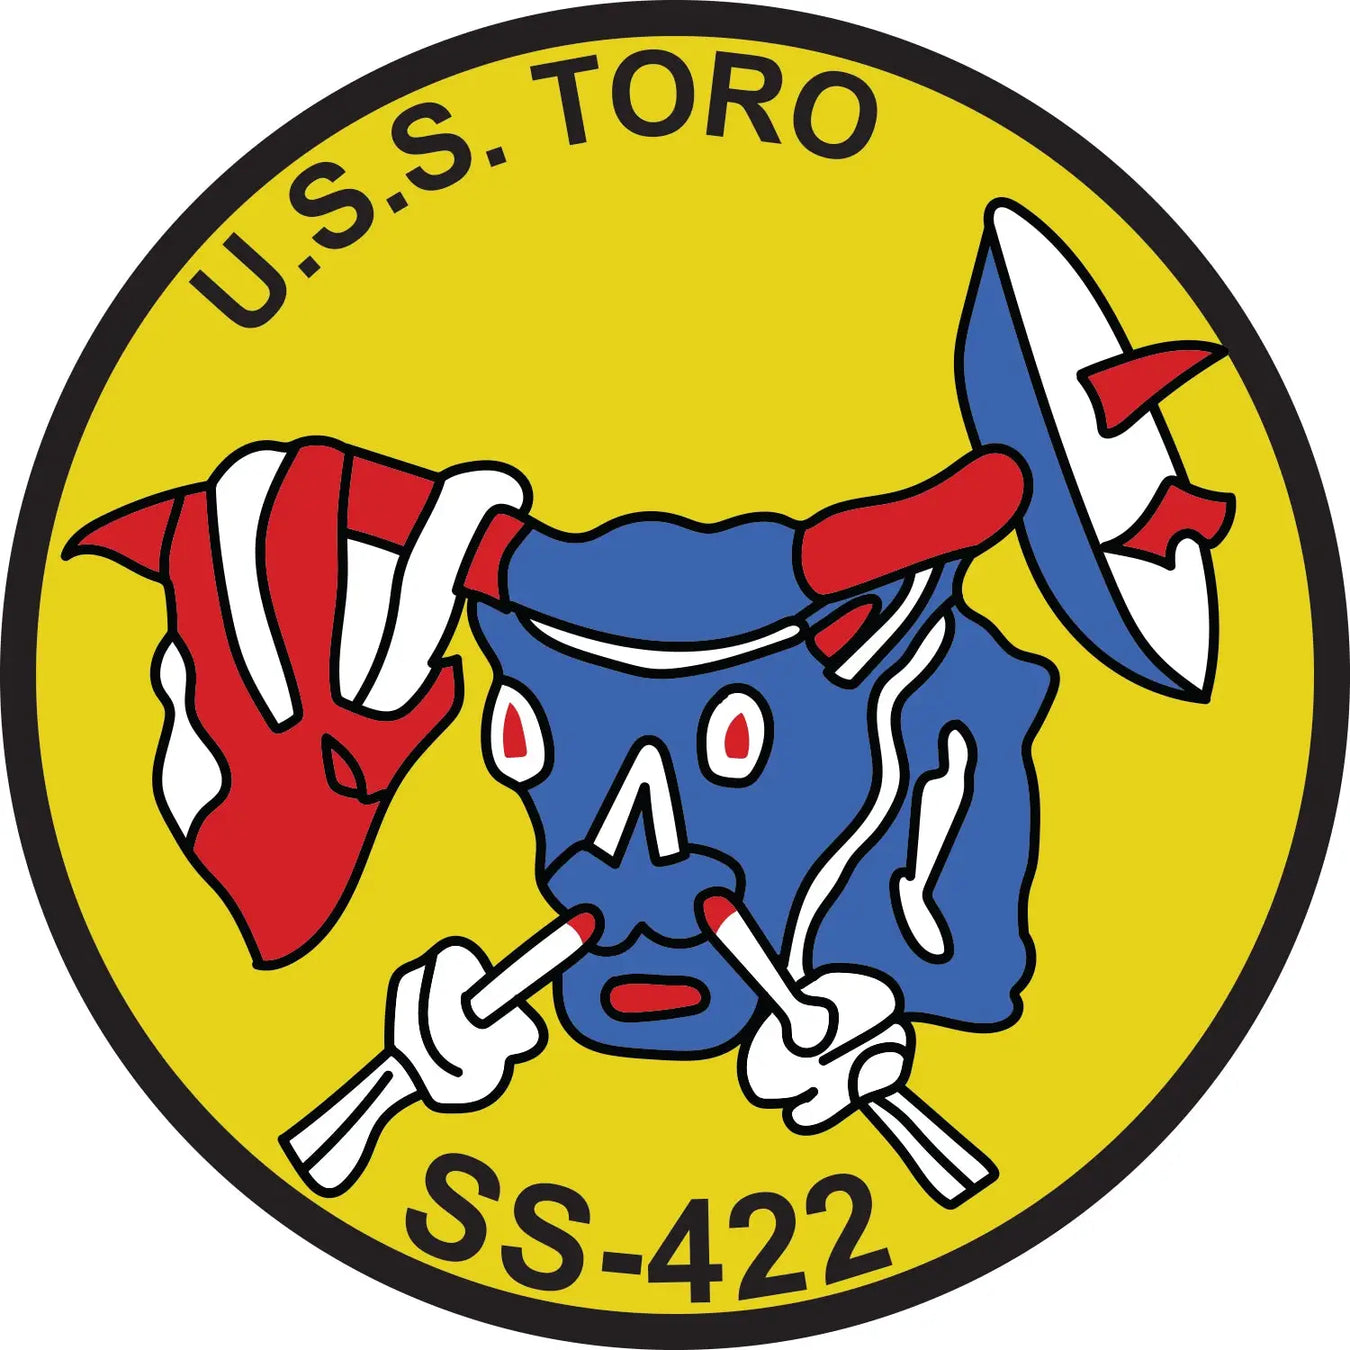 USS Toro (SS-422) Patch Logo Decal Emblem Crest Insignia